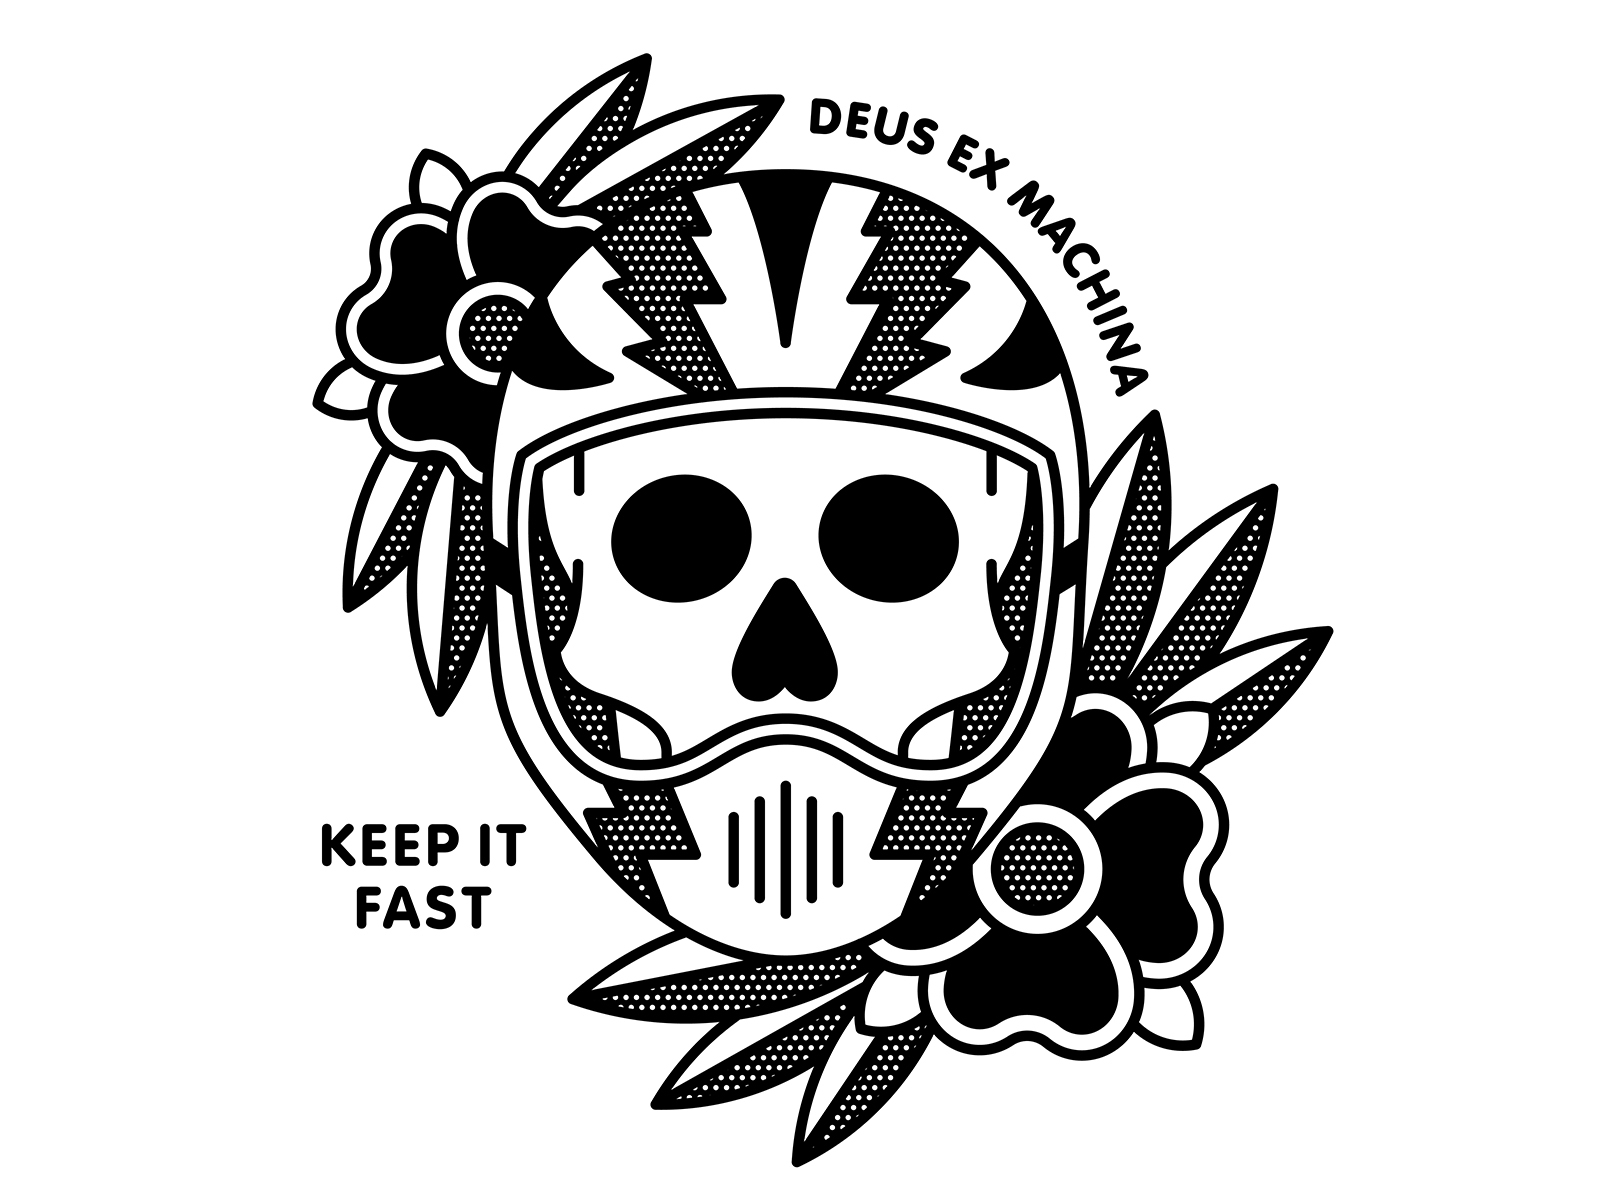 Deus Quarantee Comp apparel deus ex machina fast flower halftone helmet illustration mono line monoline motorcycle pop art racing skull tattoo typography